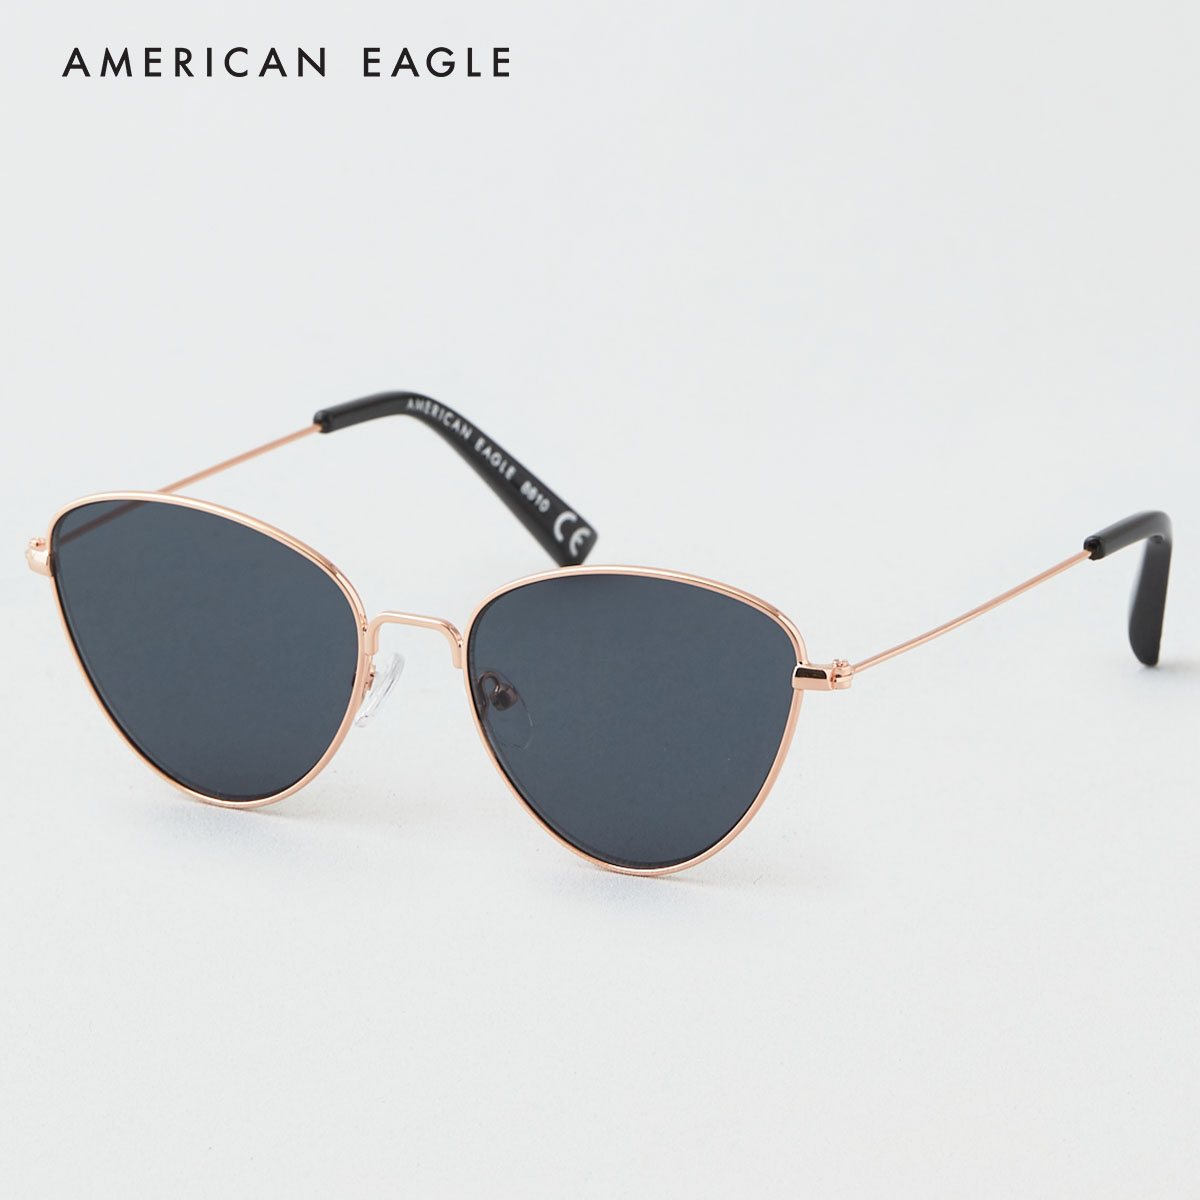 American Eagle Cat Eye Aviator Sunglasses แว่นตา ผู้หญิง แฟชั่น(048-8610-001)